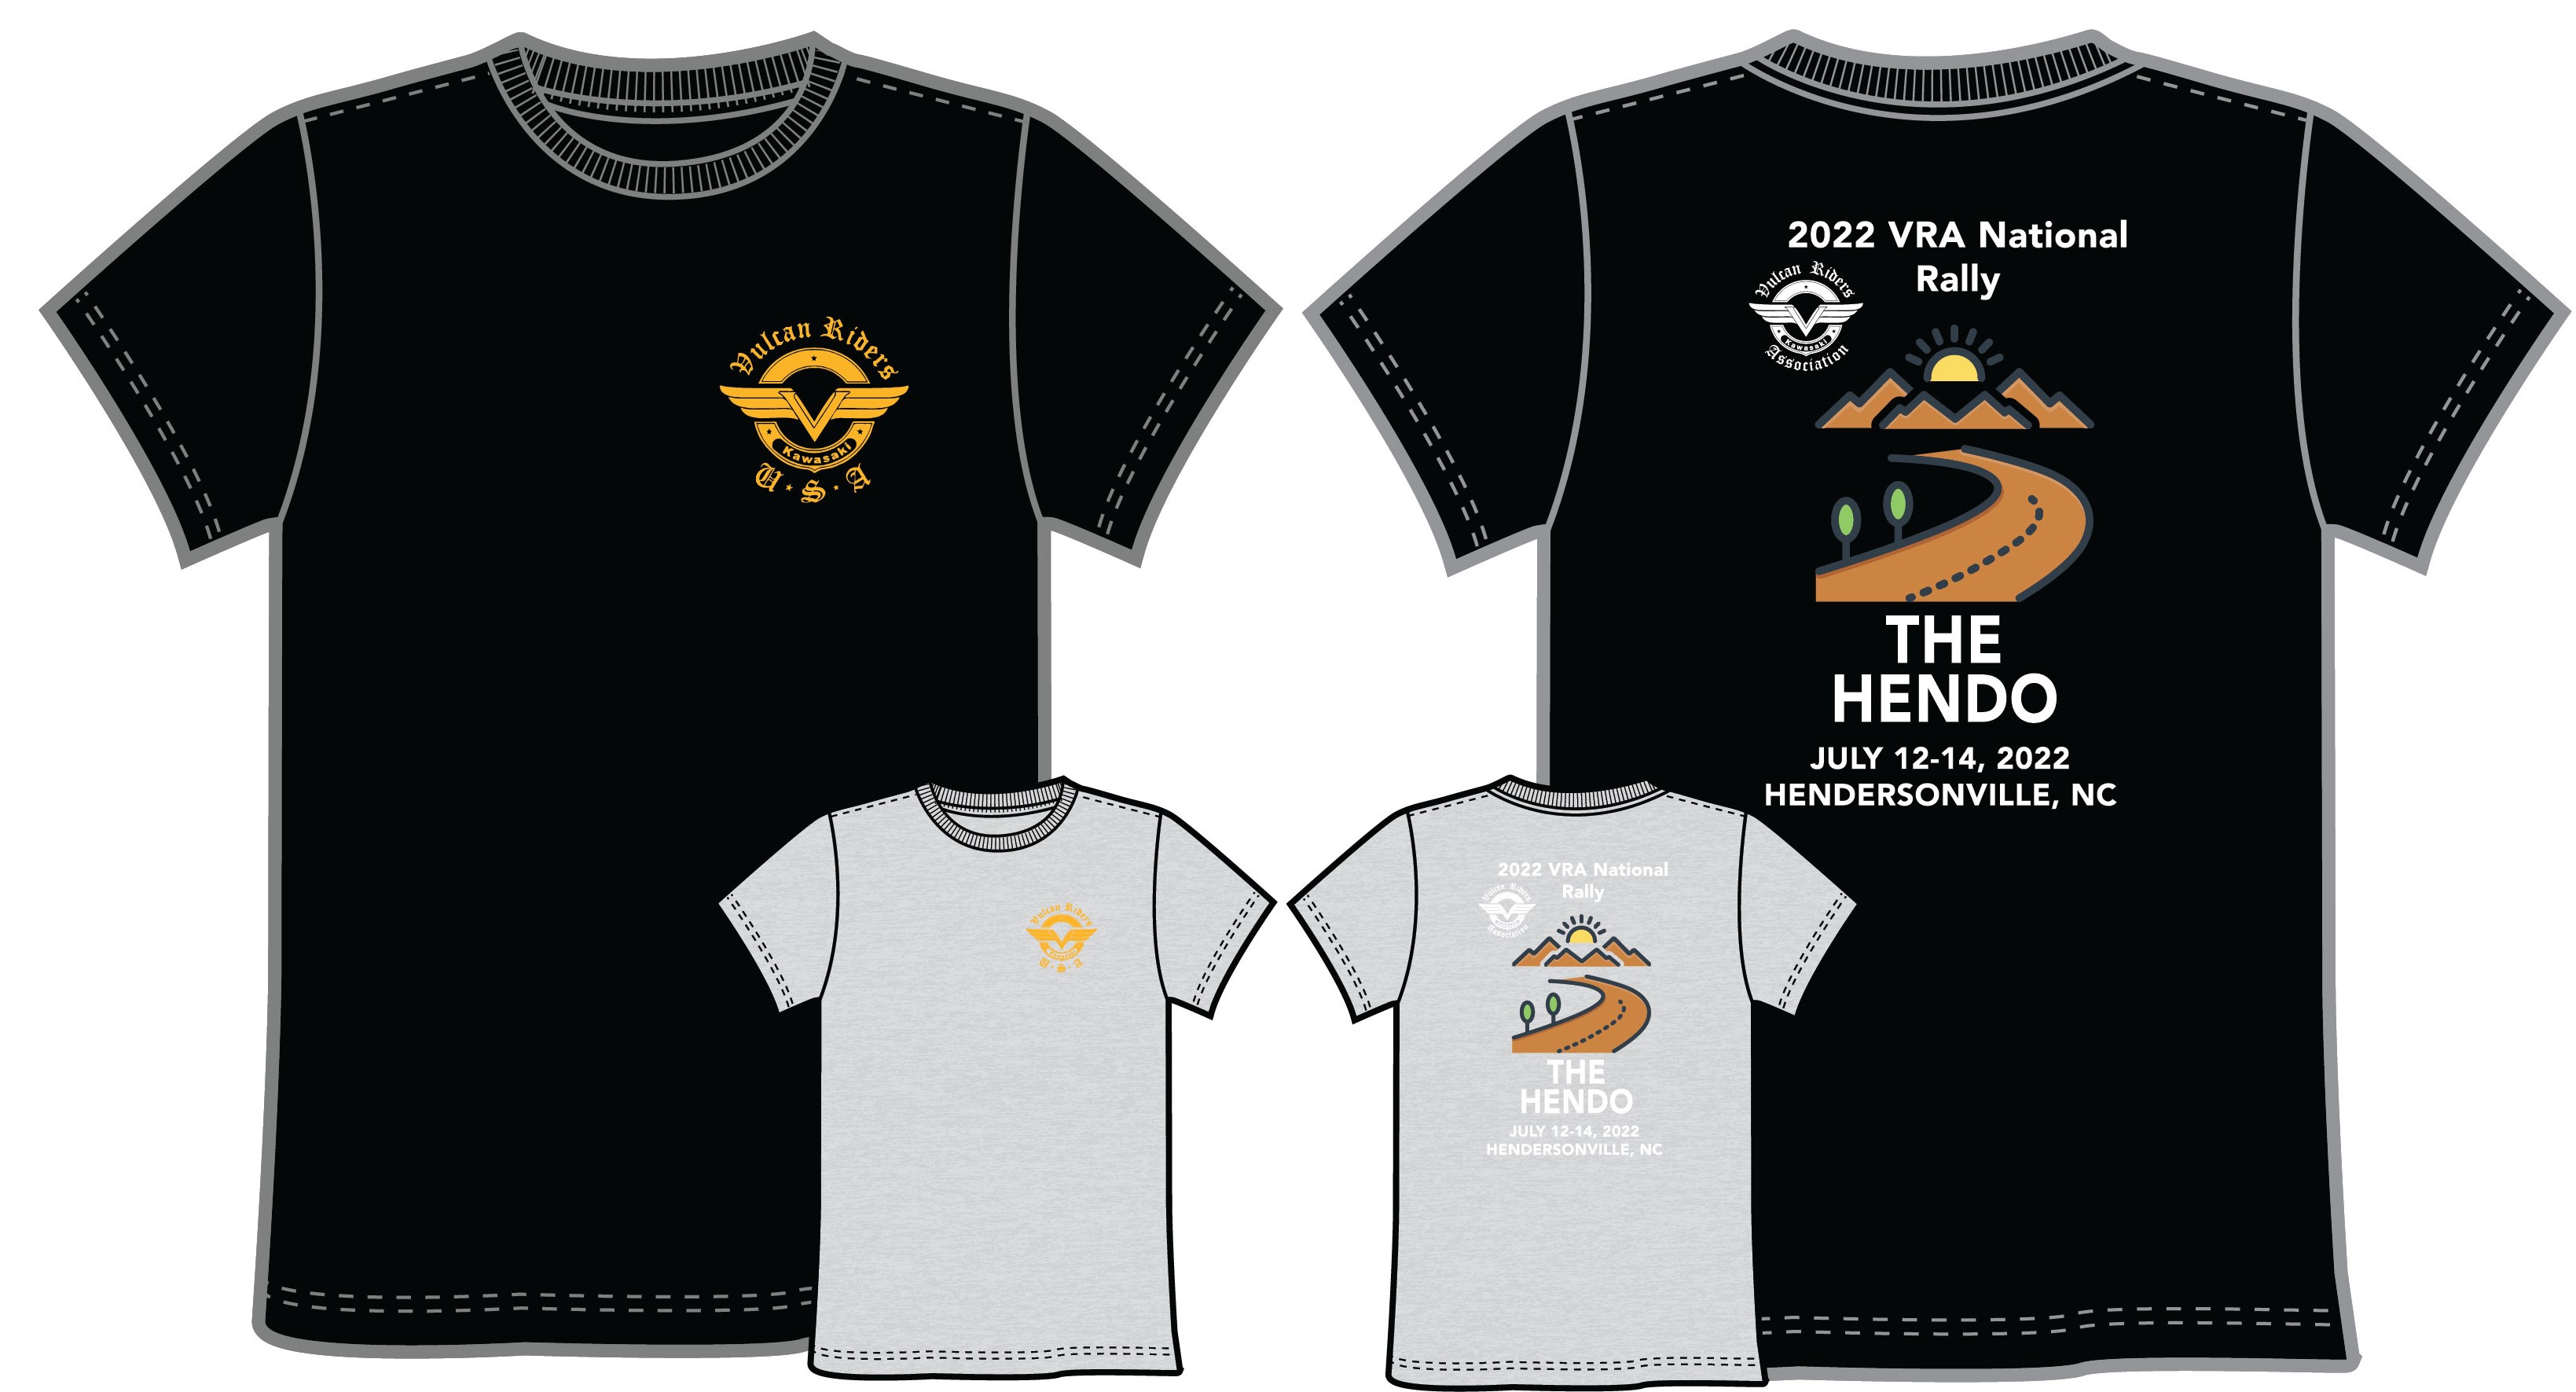 2022 - National Rally "The Hendo" T-shirt